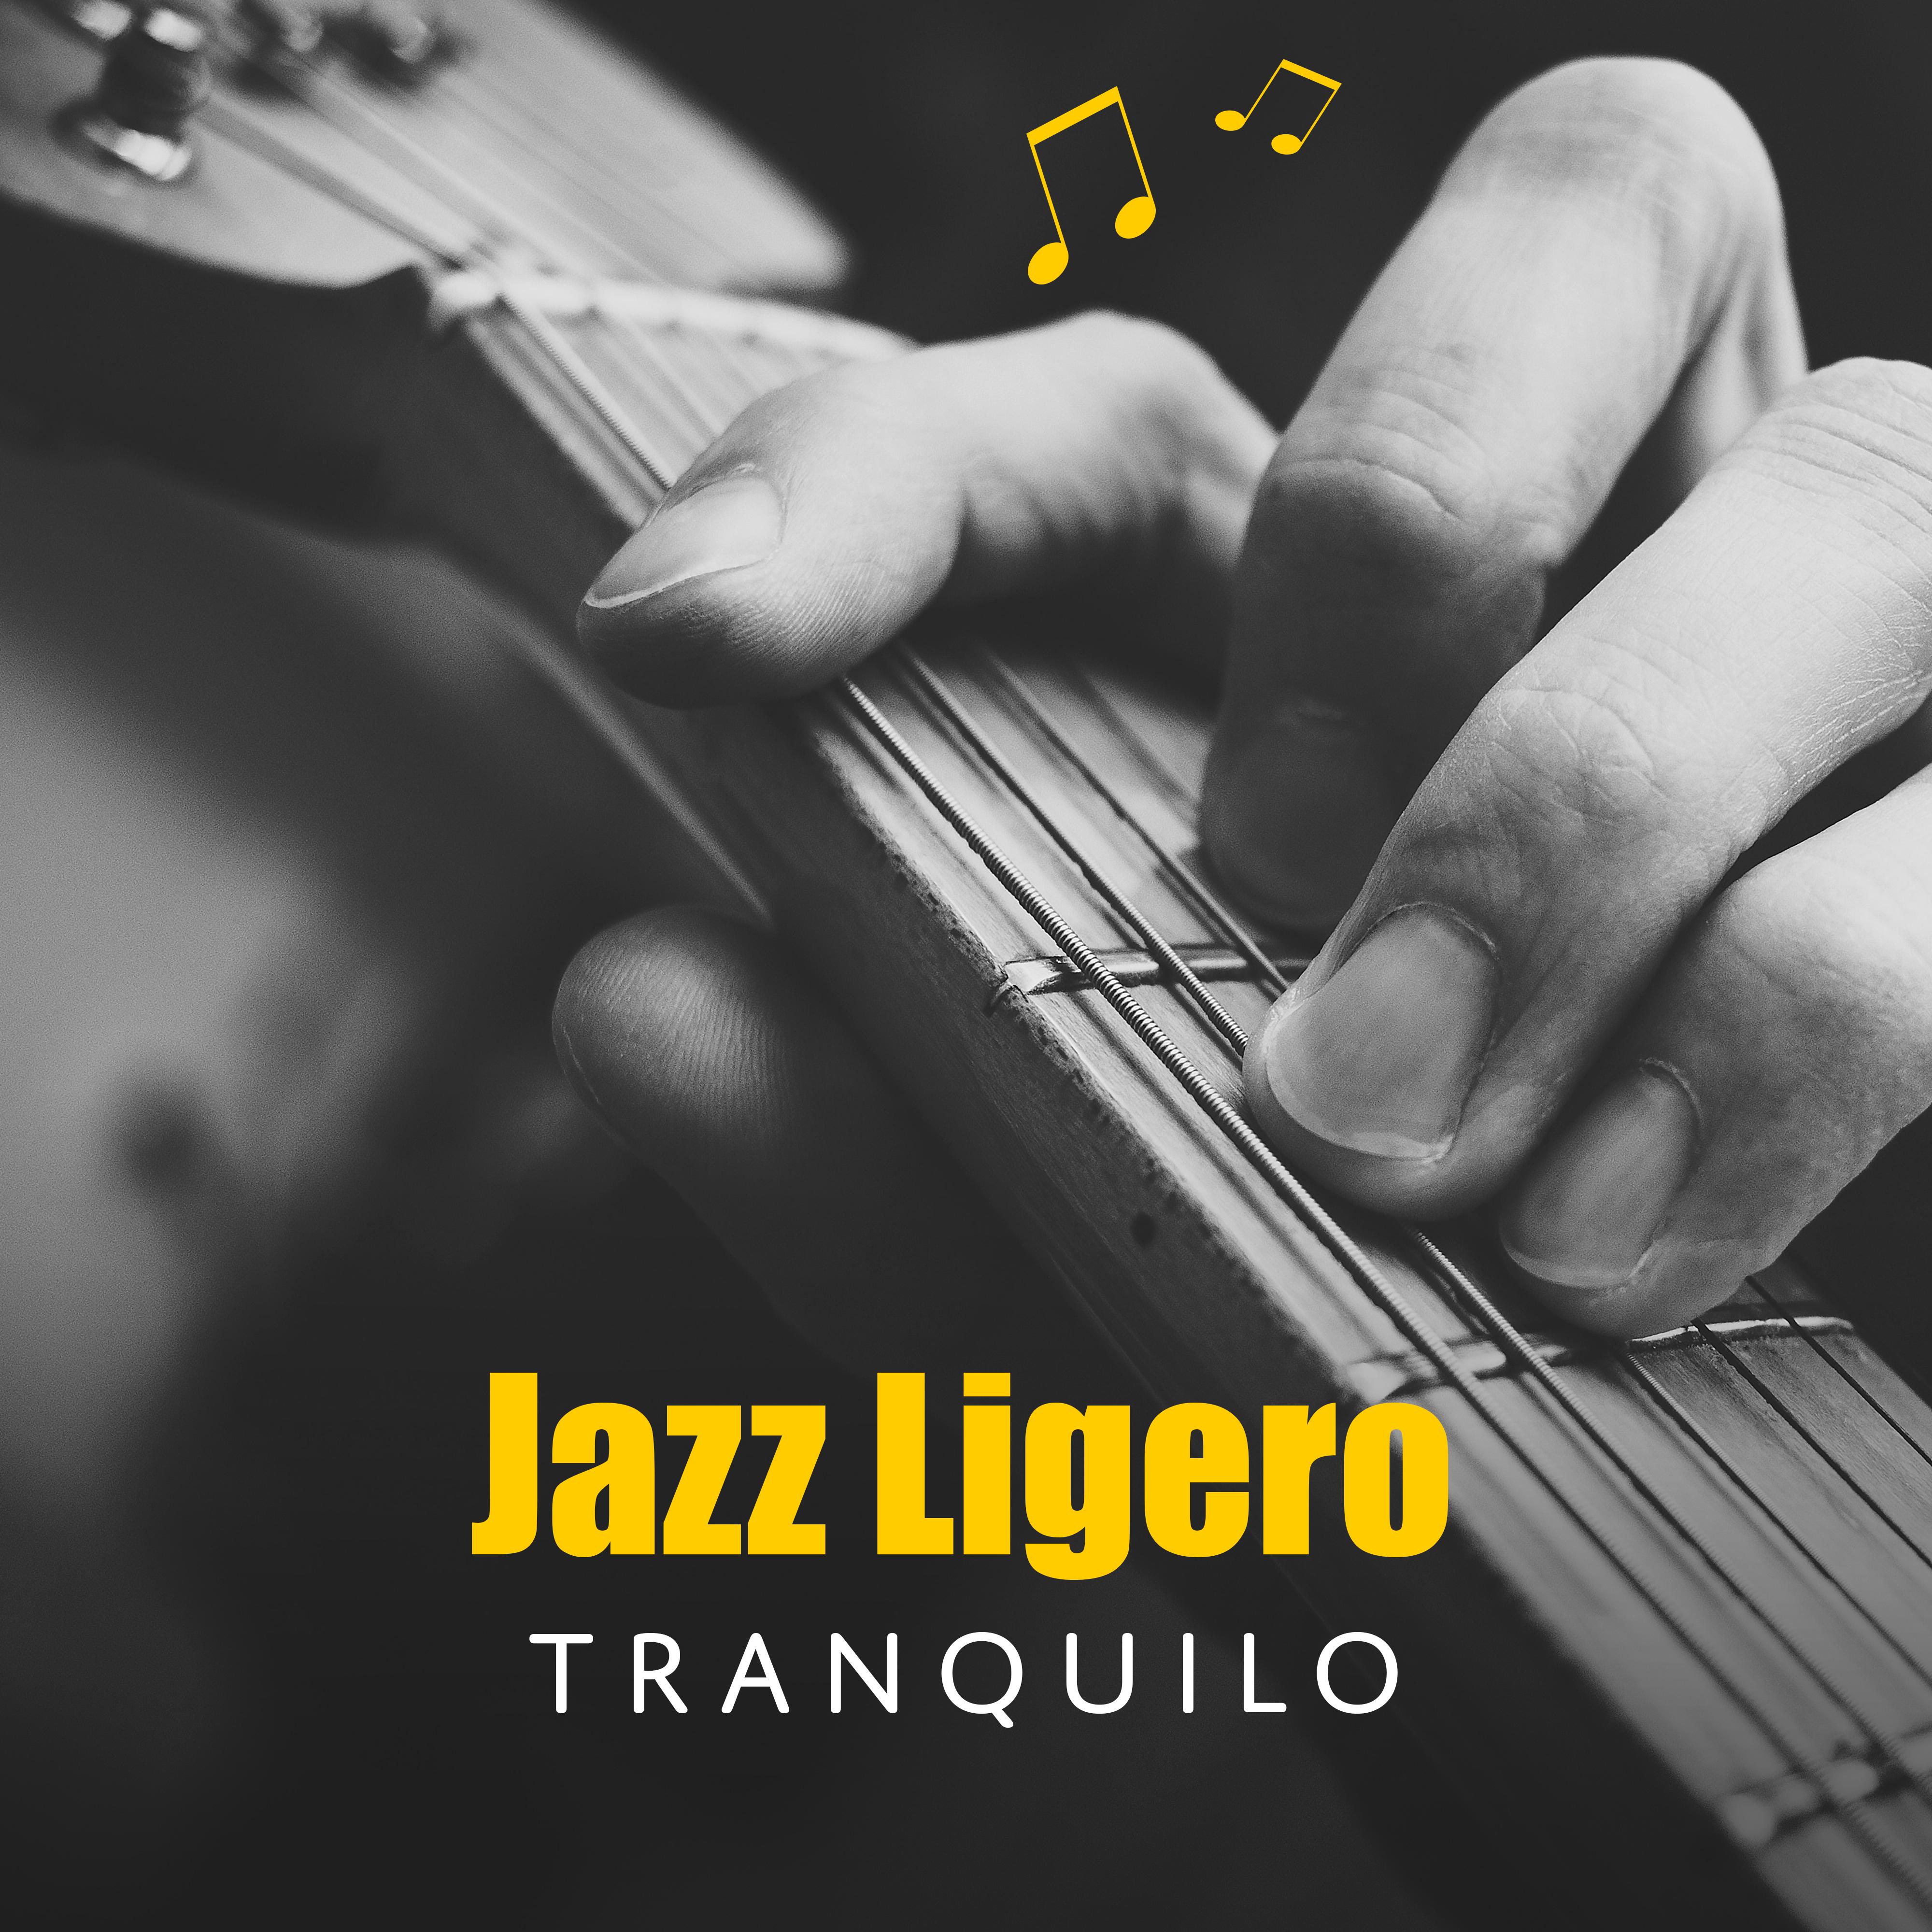 Jazz Ligero Tranquilo